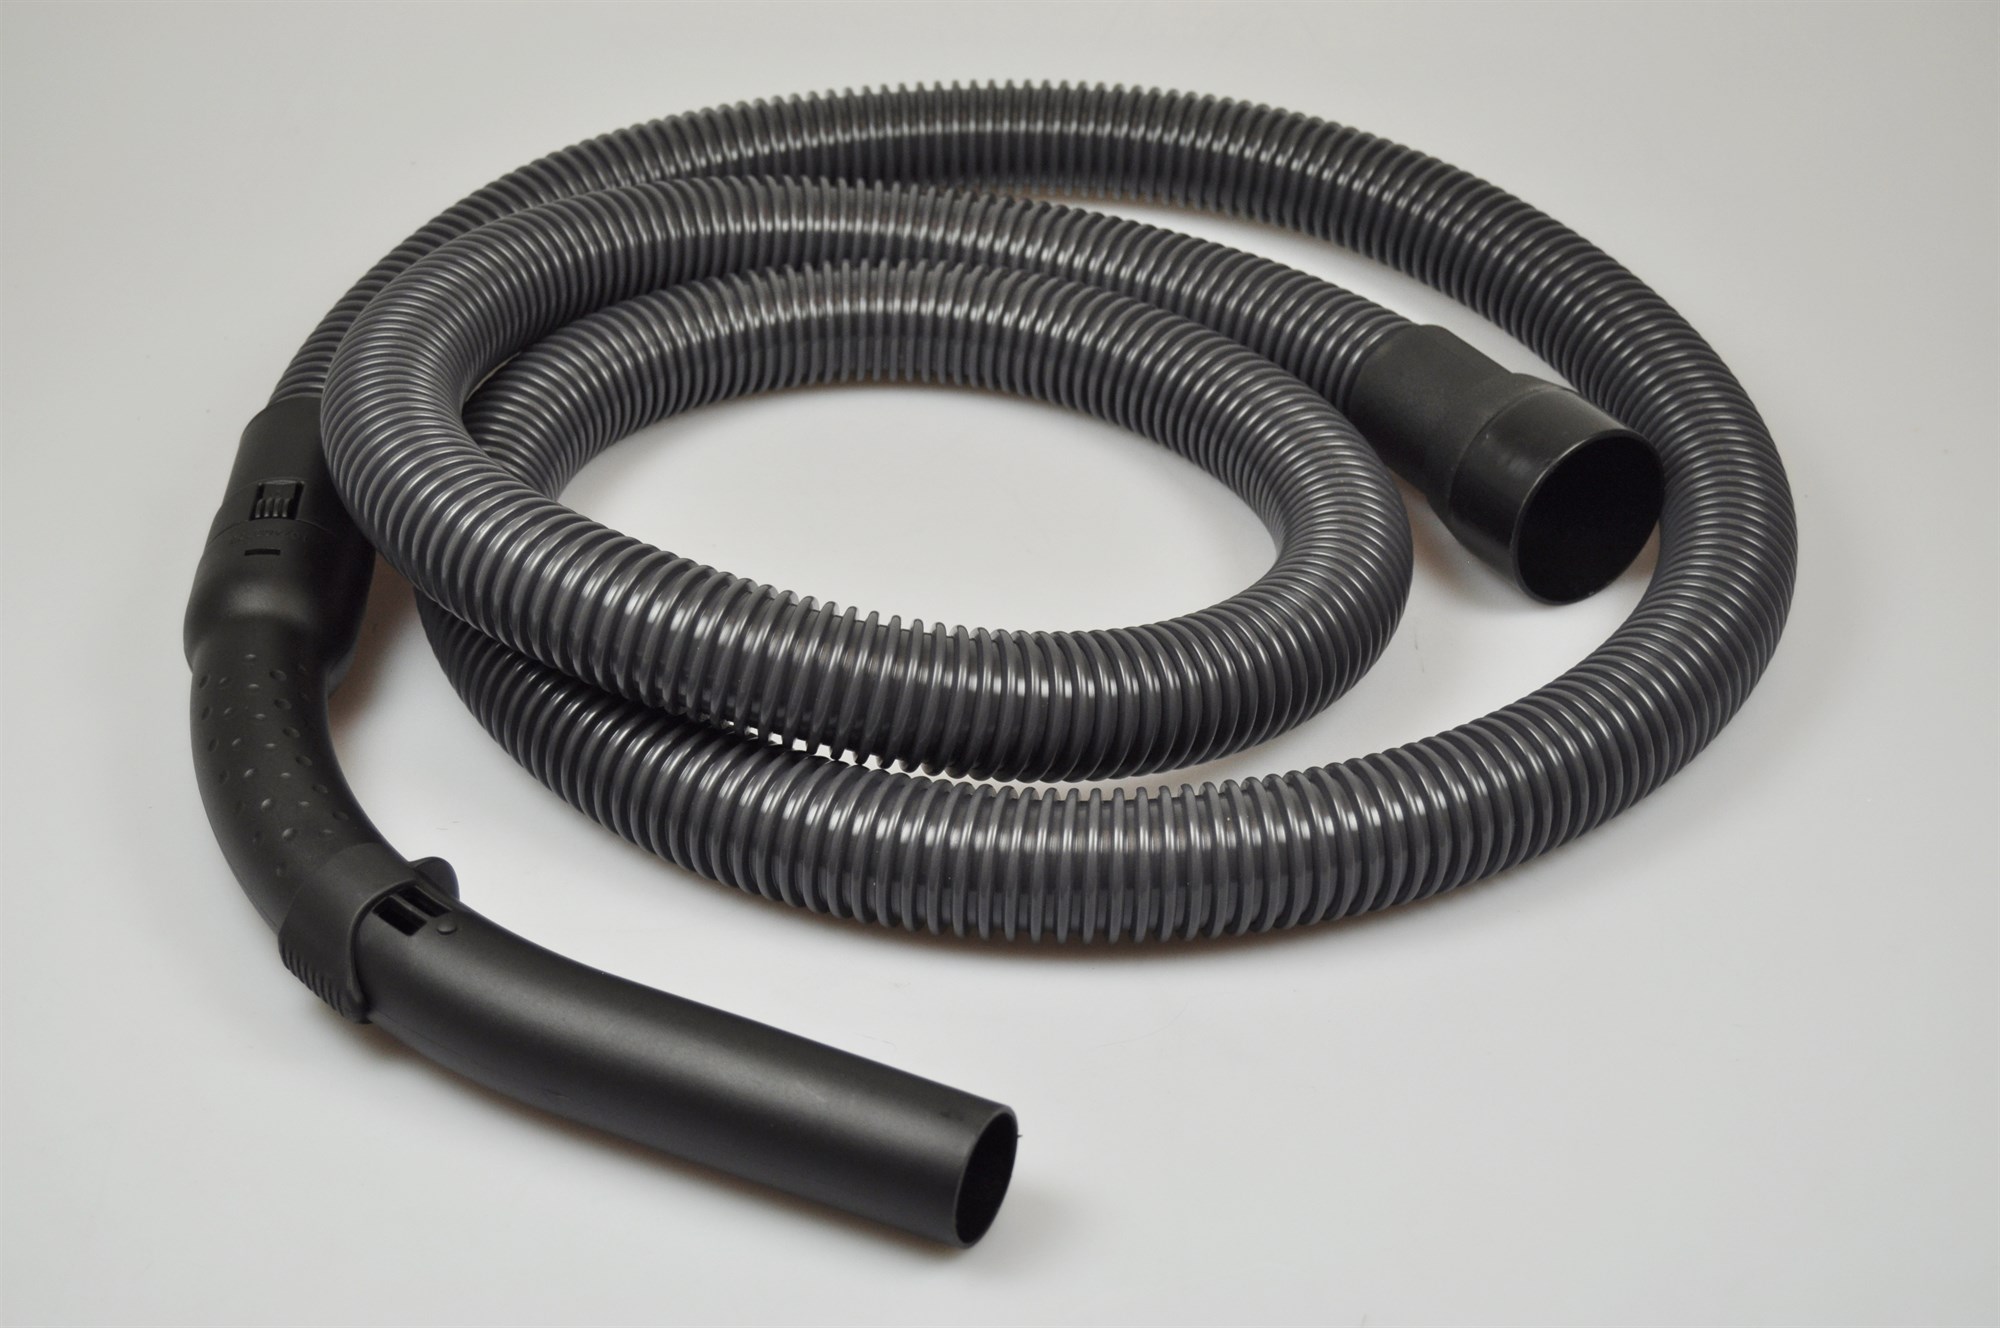 Suction hose, Nilfisk vacuum cleaner